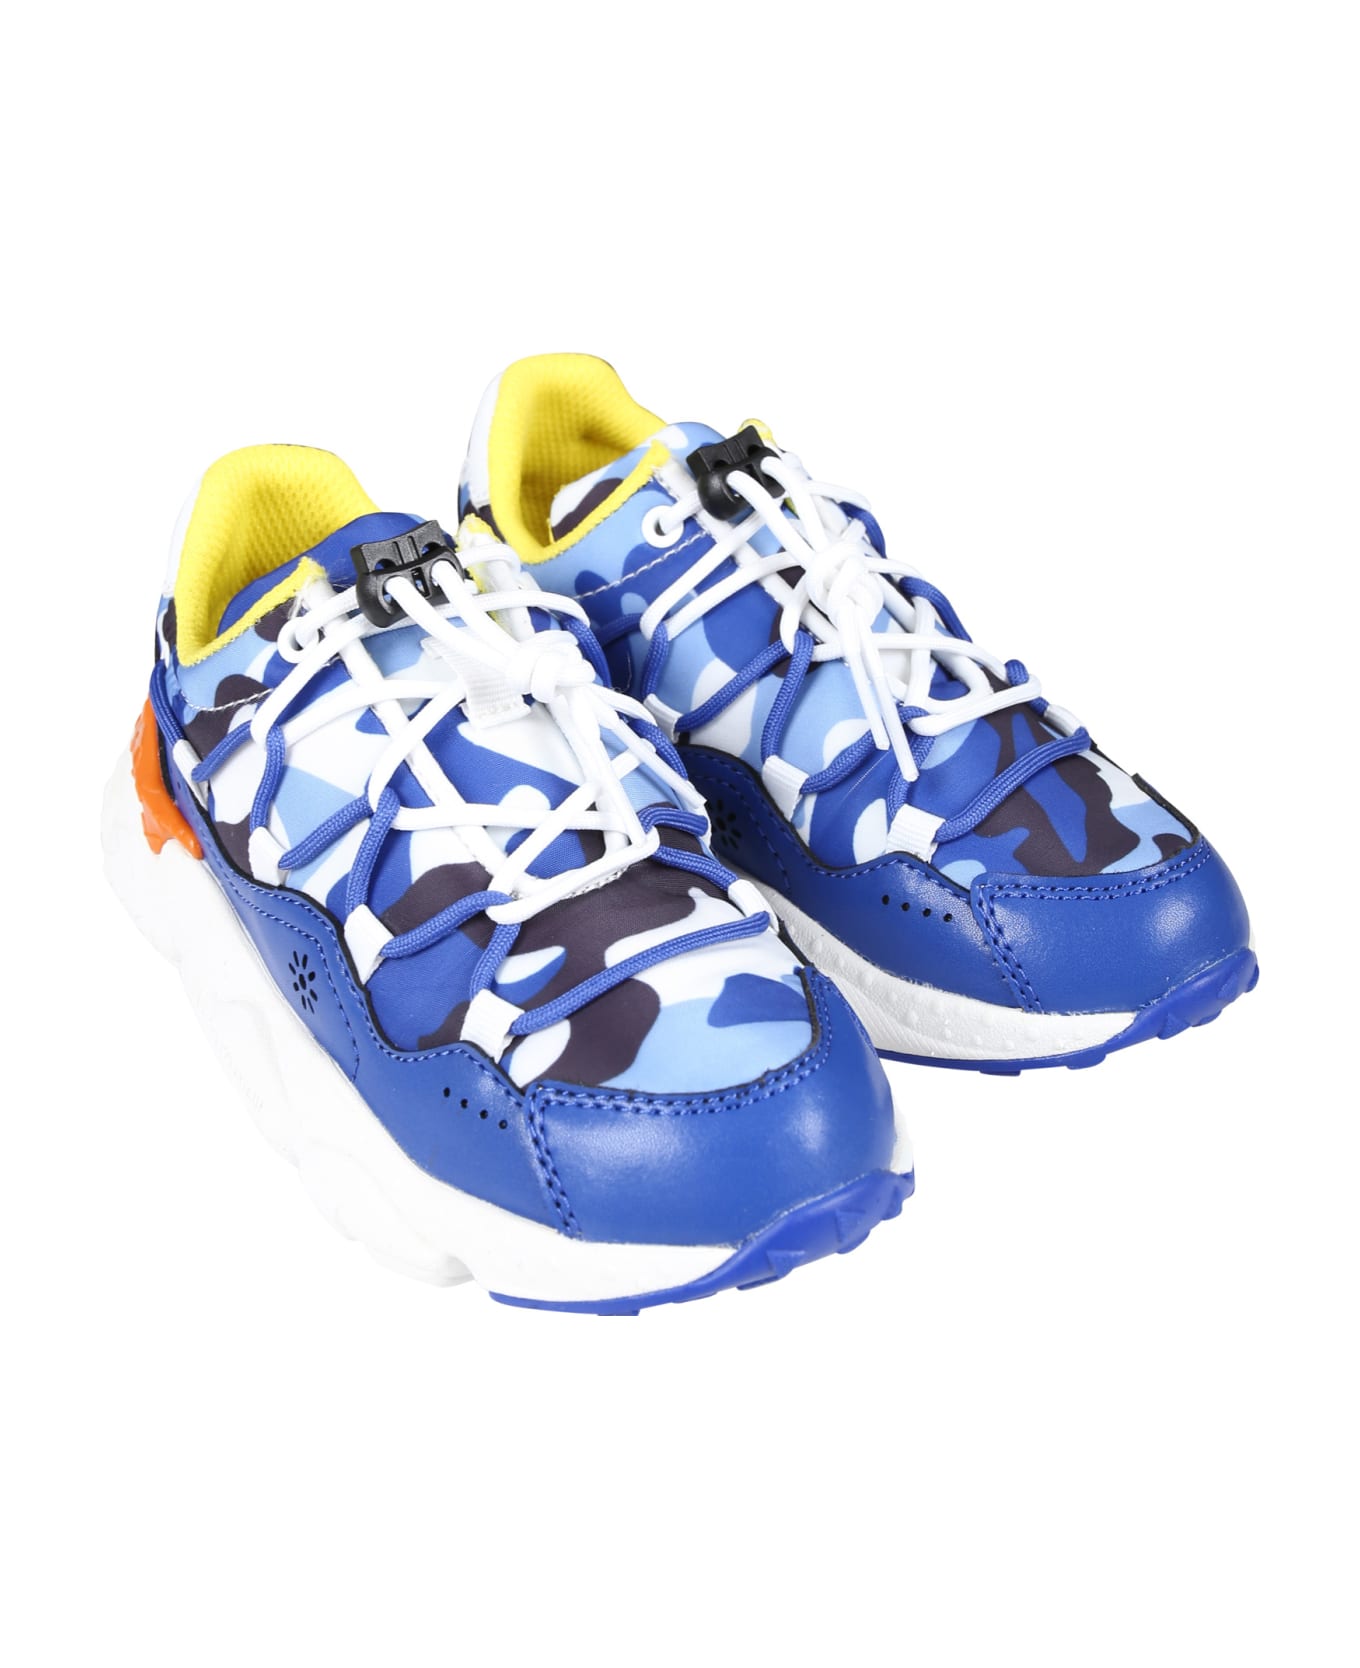 Flower Mountain Blue Raikiri Sneakers For Boy - Blue